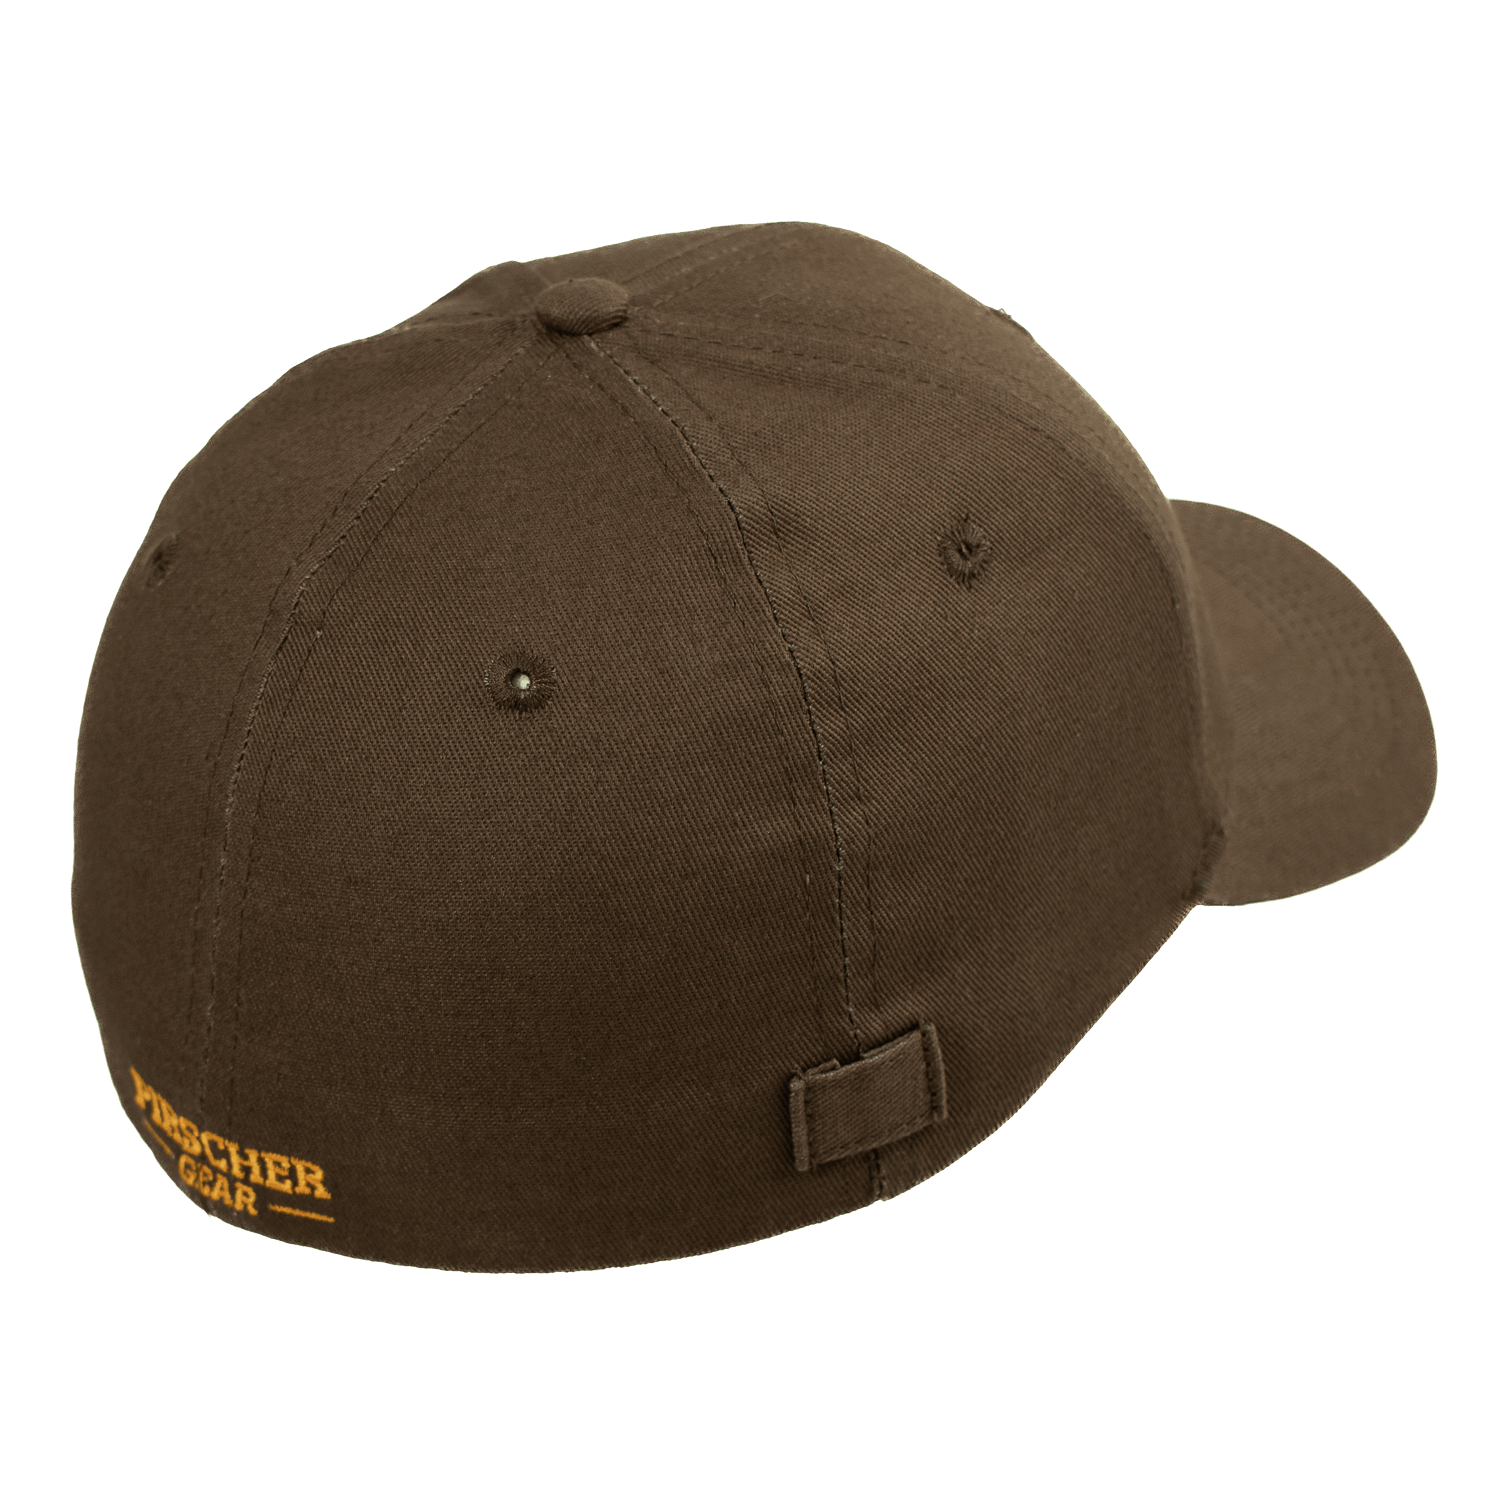 Pirscher Gear cap Logo (braun)